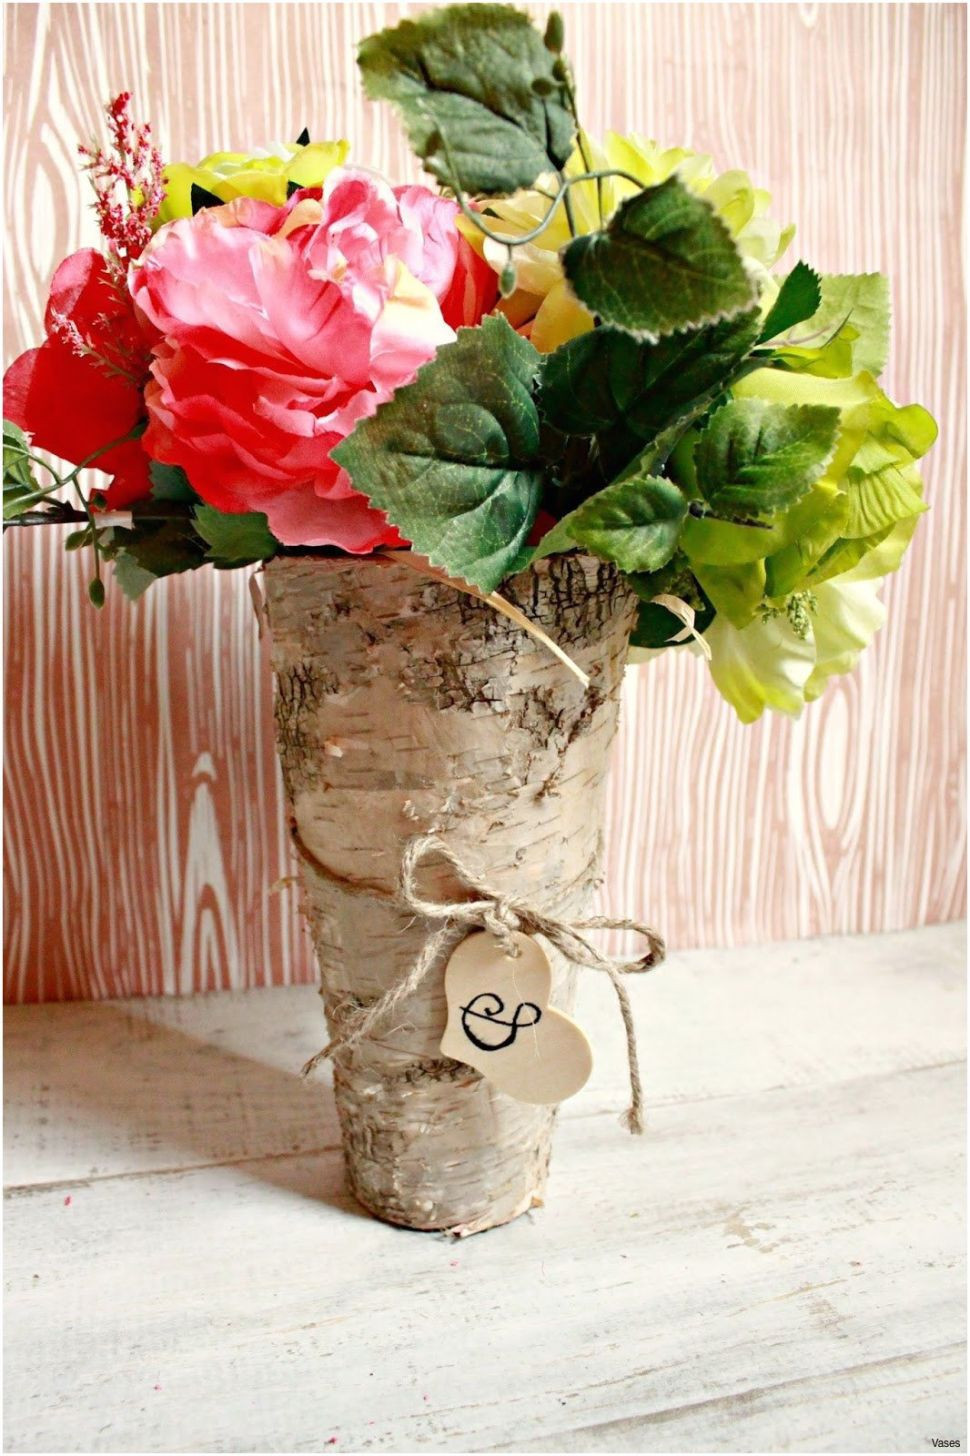 black vase stand of vase with stand pics silk bouquets h vases diy wood vase i 0d base pertaining to silk bouquets h vases diy wood vase i 0d base turntable baseboard